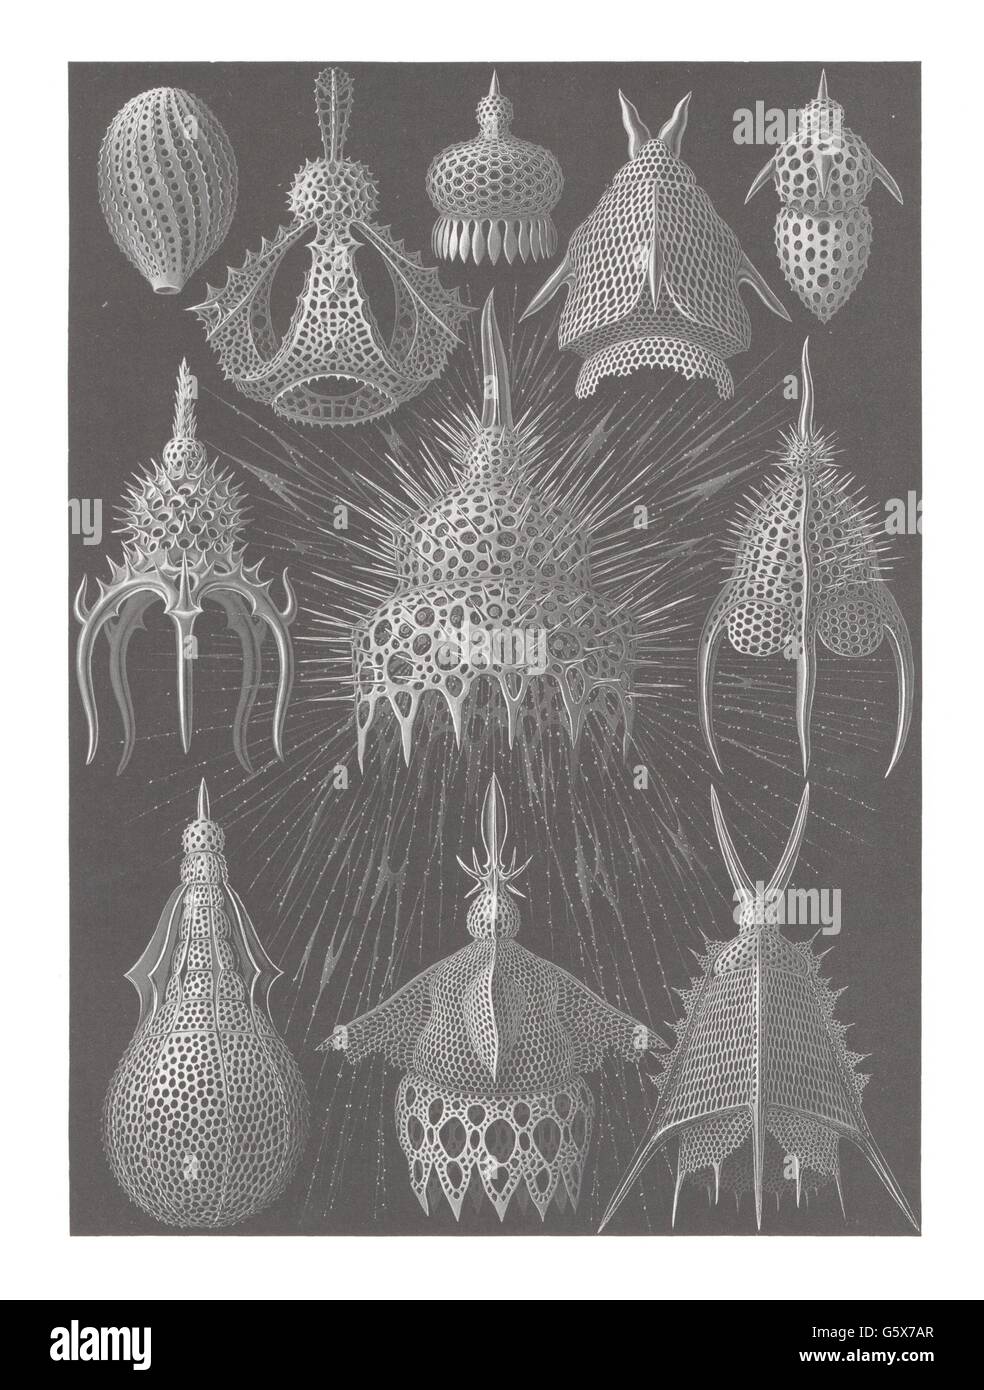 zoologie / Tiere, Zyrtoidea, Farblithographie, aus: Ernst Haeckel, 'Kunstformen der Natur', Leipzig - Wien, 1899 - 1904, Additional-Rights-Clearences-not available Stockfoto